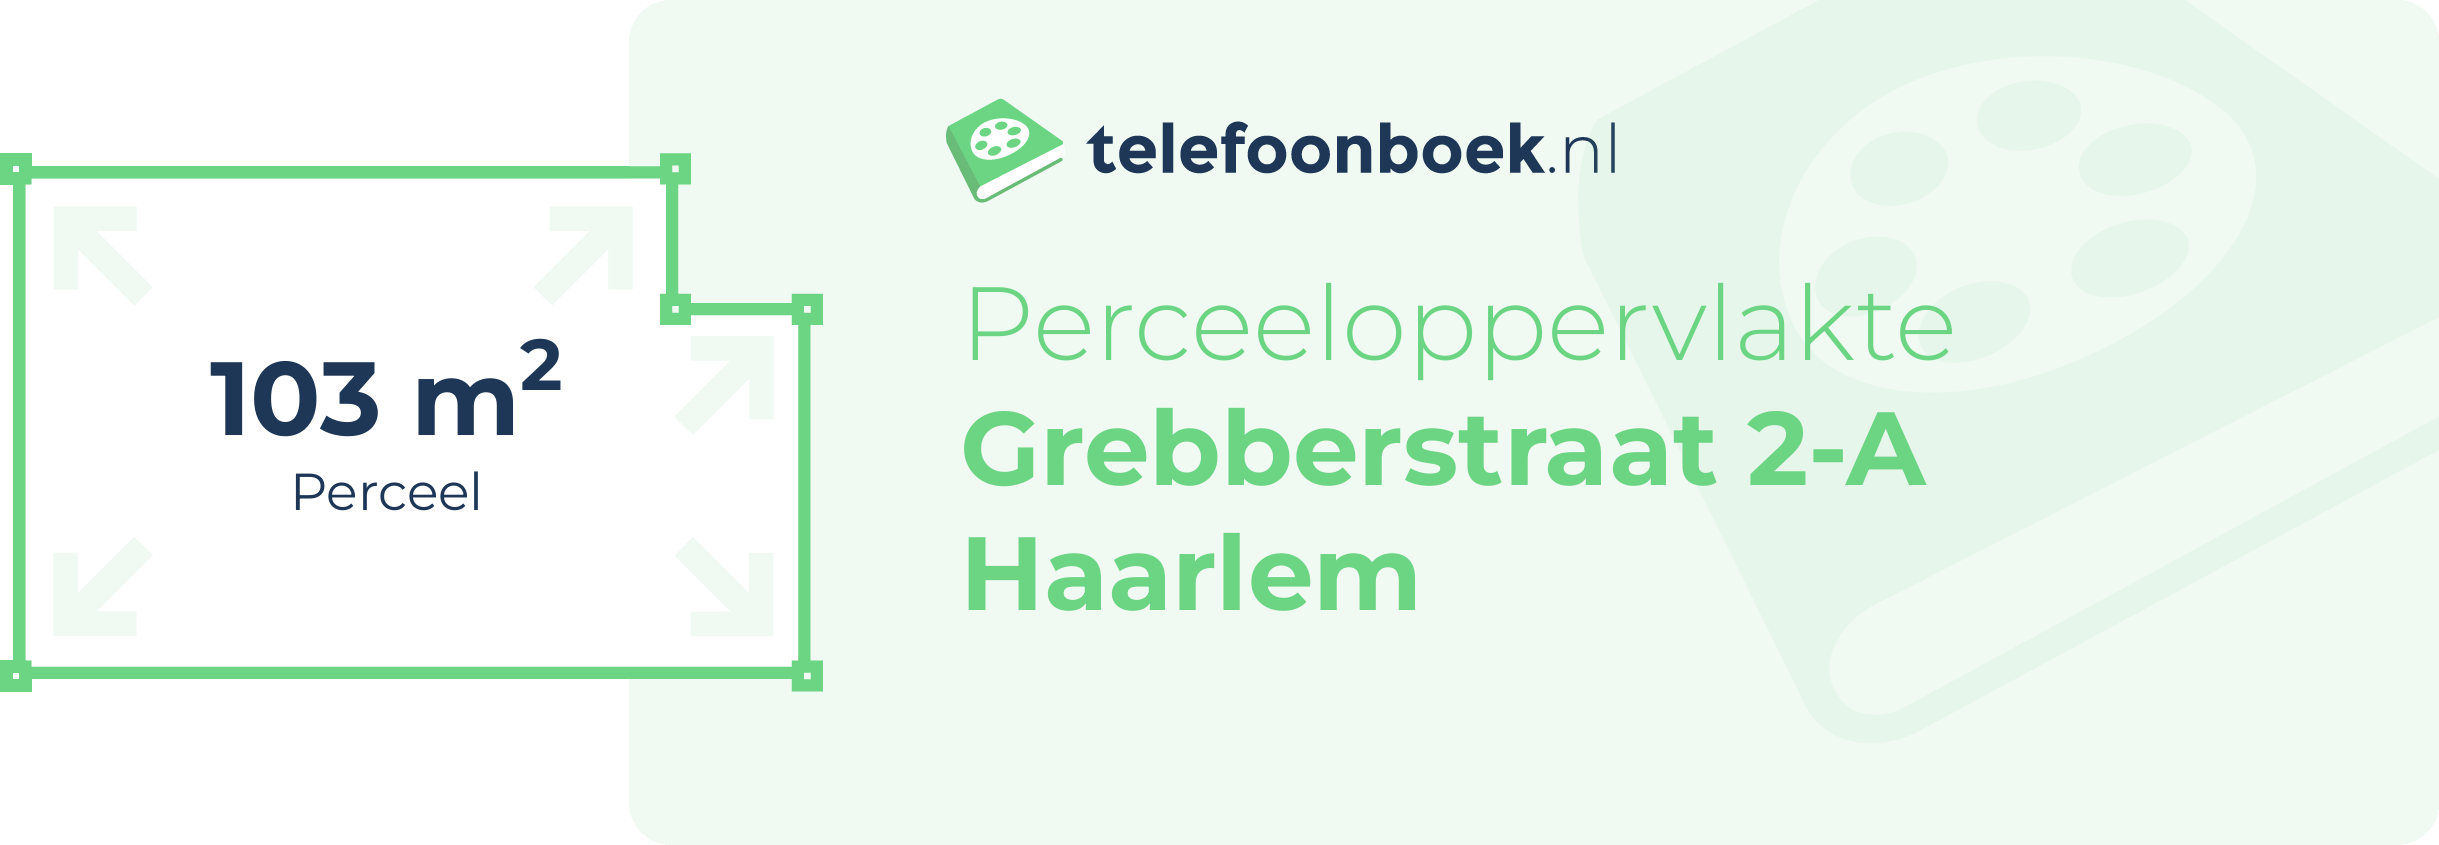 Perceeloppervlakte Grebberstraat 2-A Haarlem